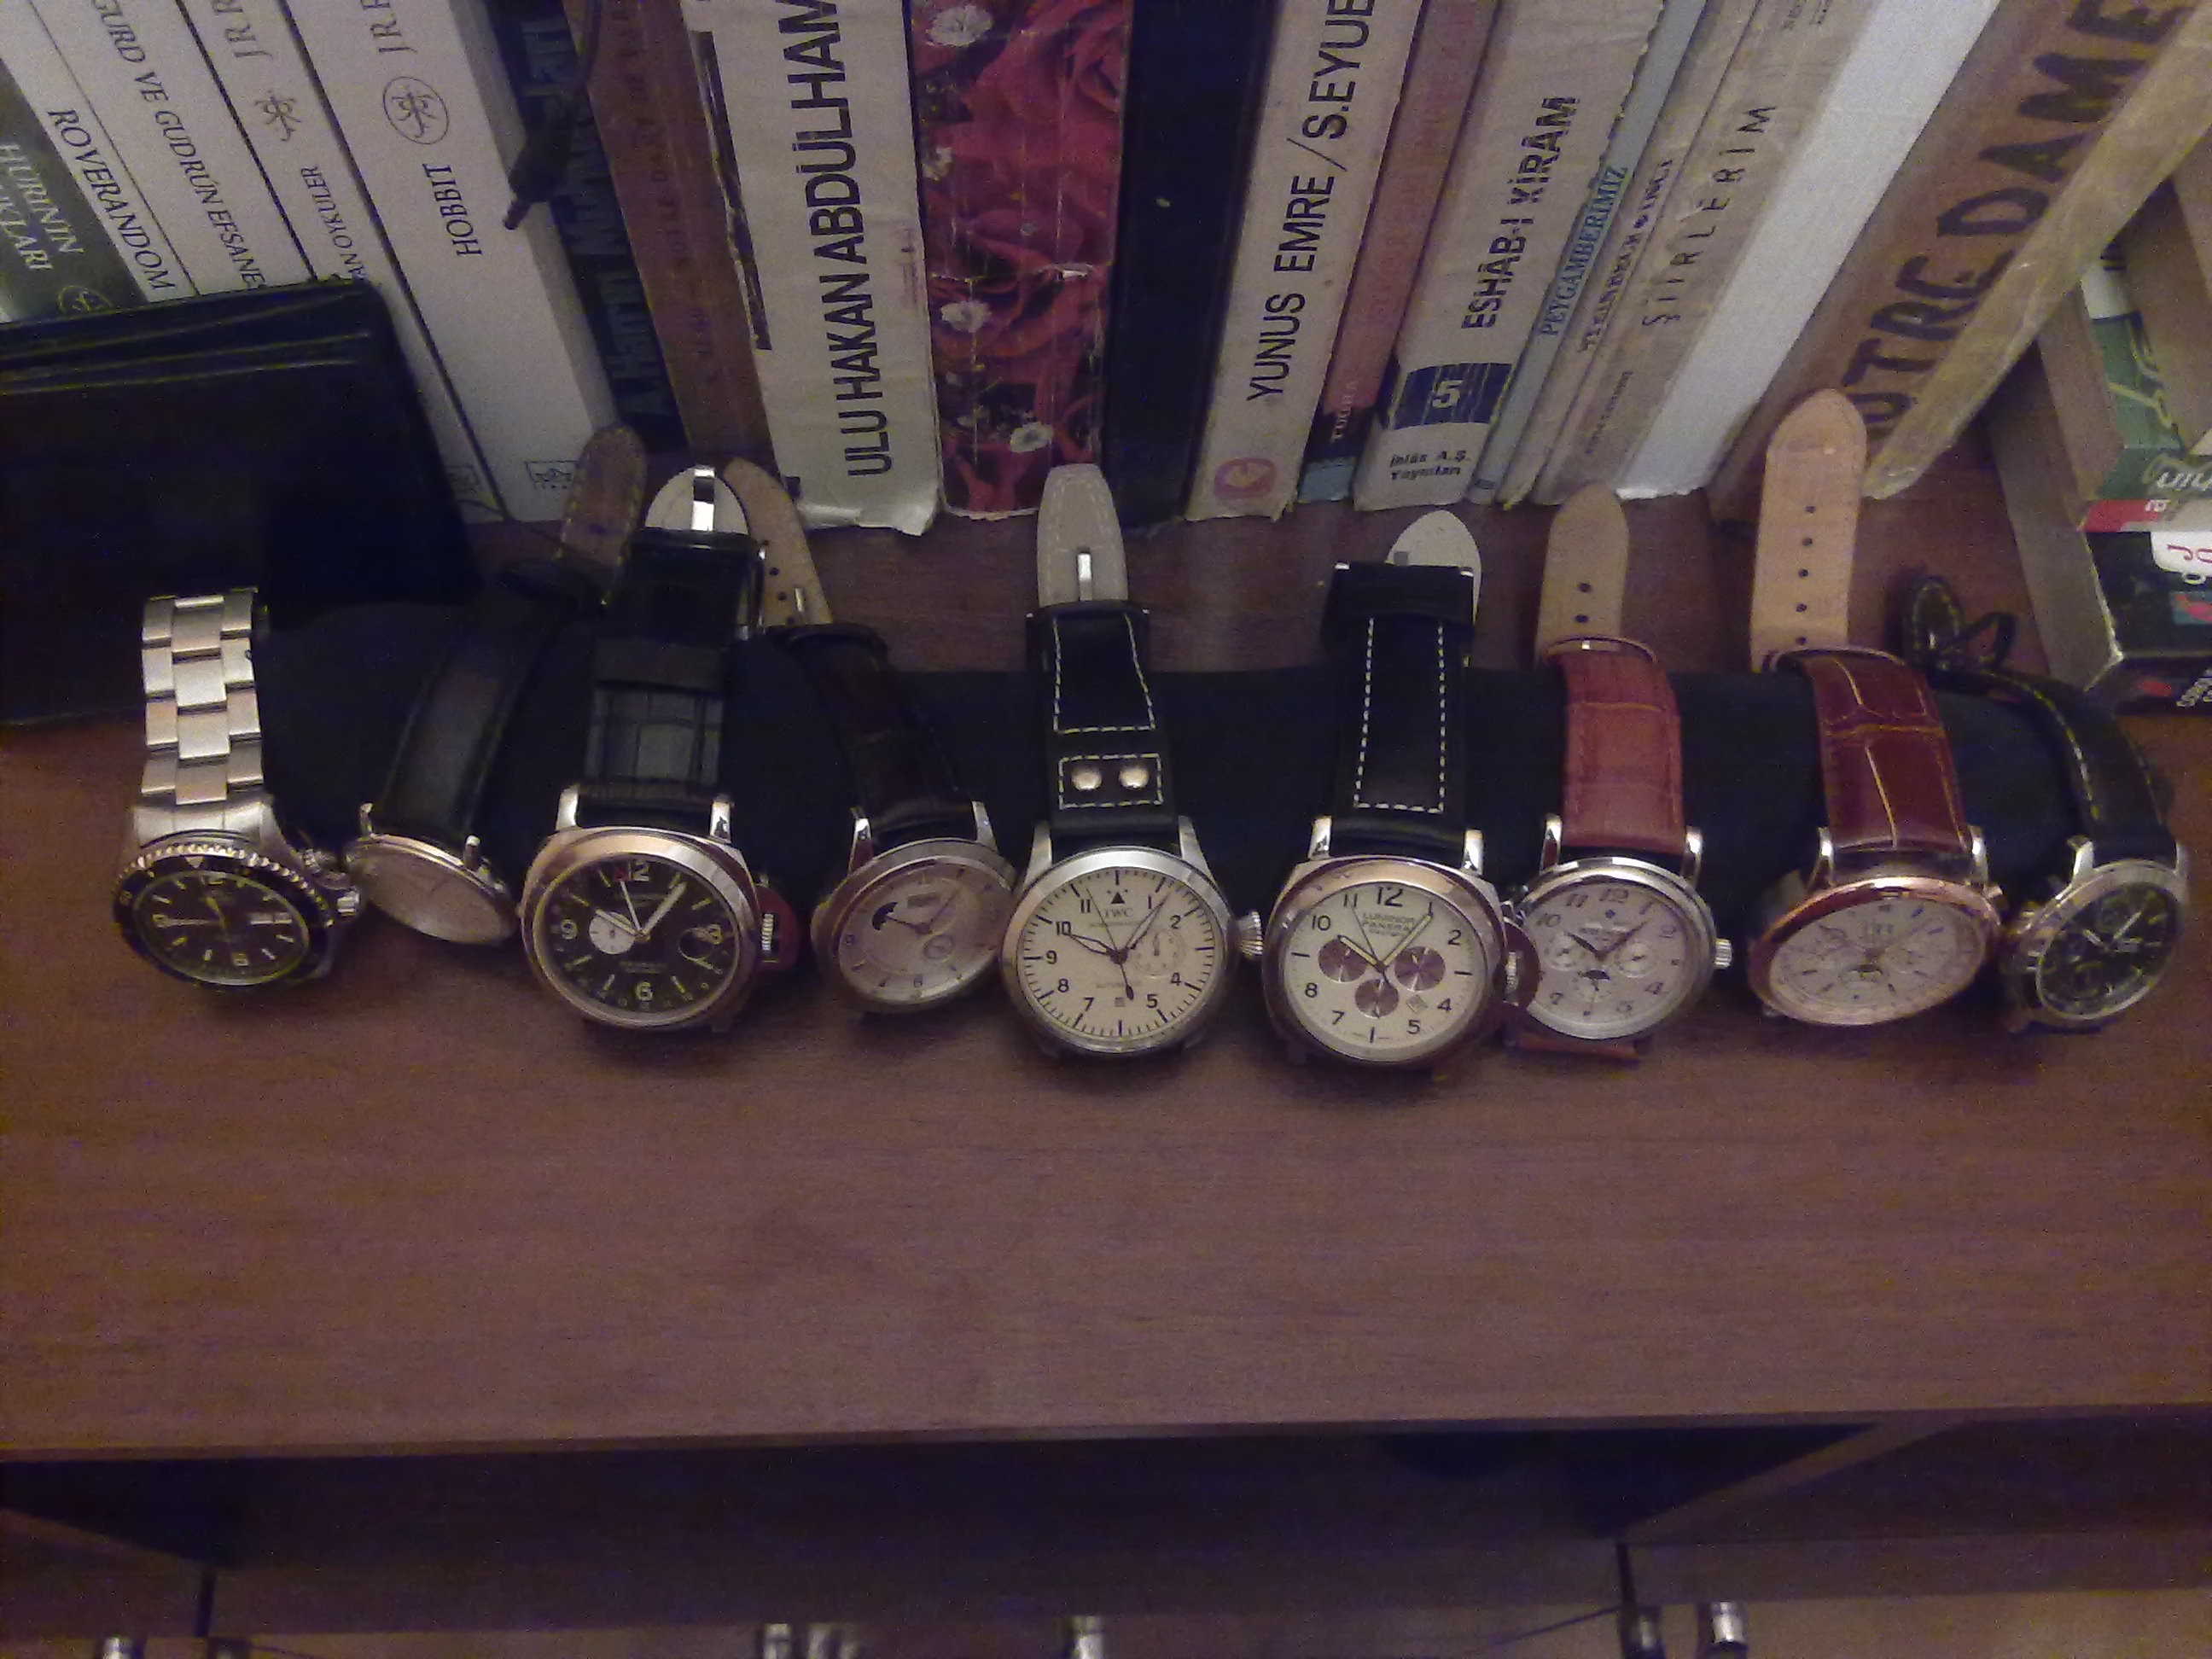  Saat Koleksiyonum